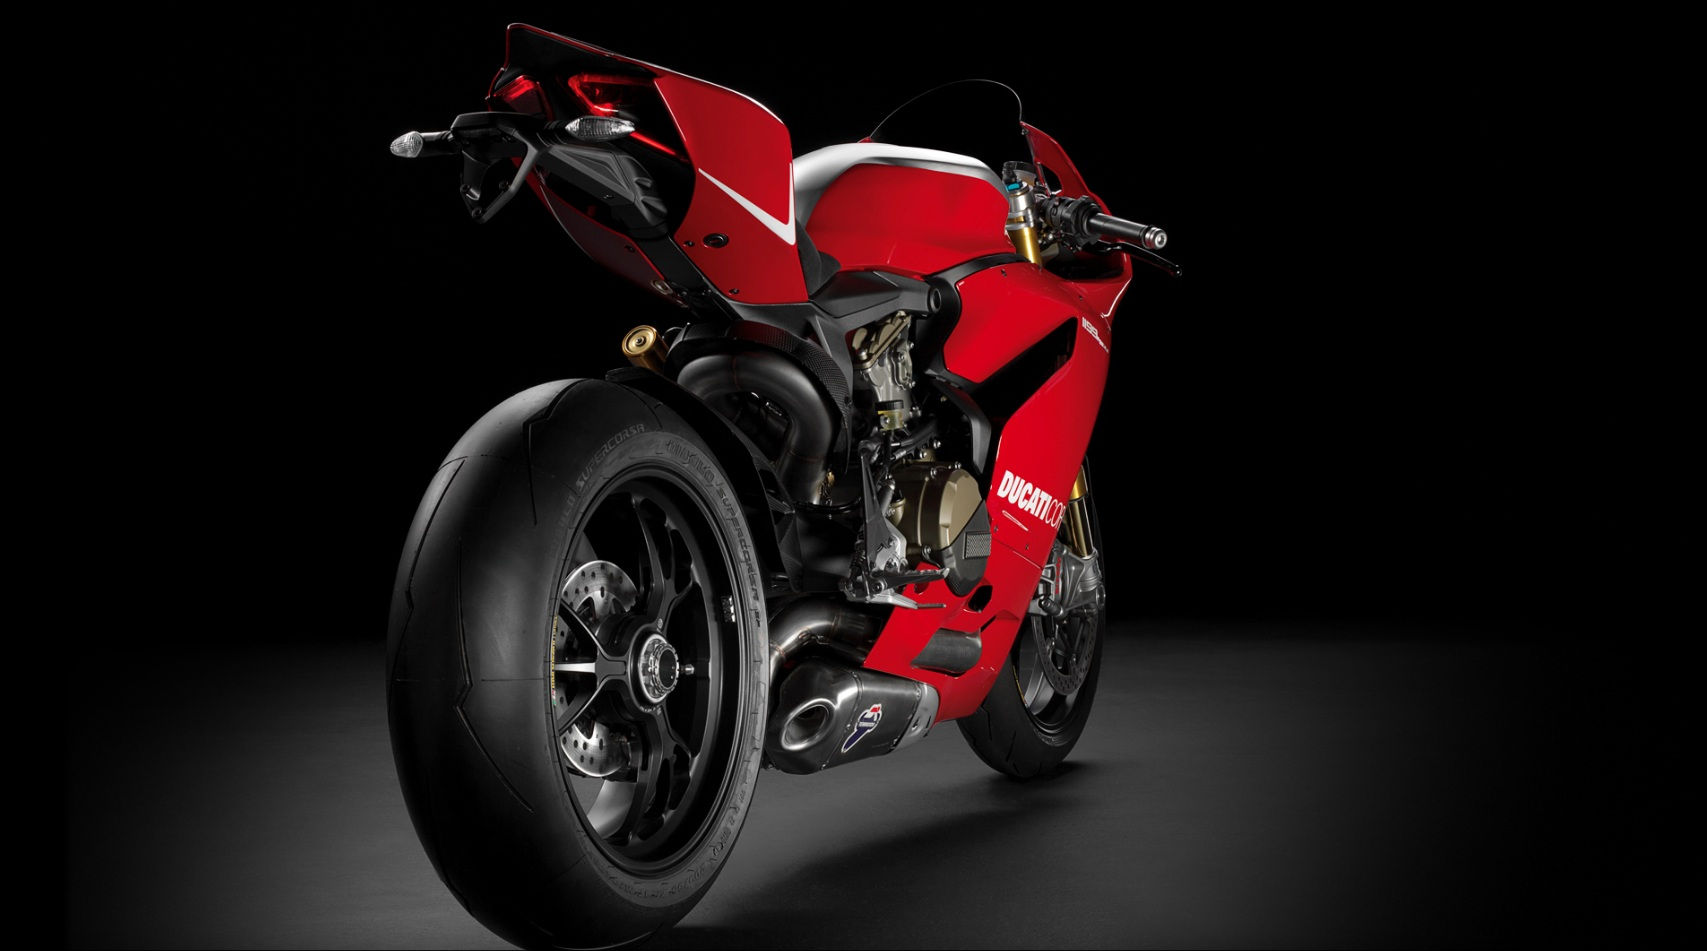 http://www.unfinishedman.com/wp-content/uploads/2012/11/Ducati-1199-Panigale-R-4.jpg